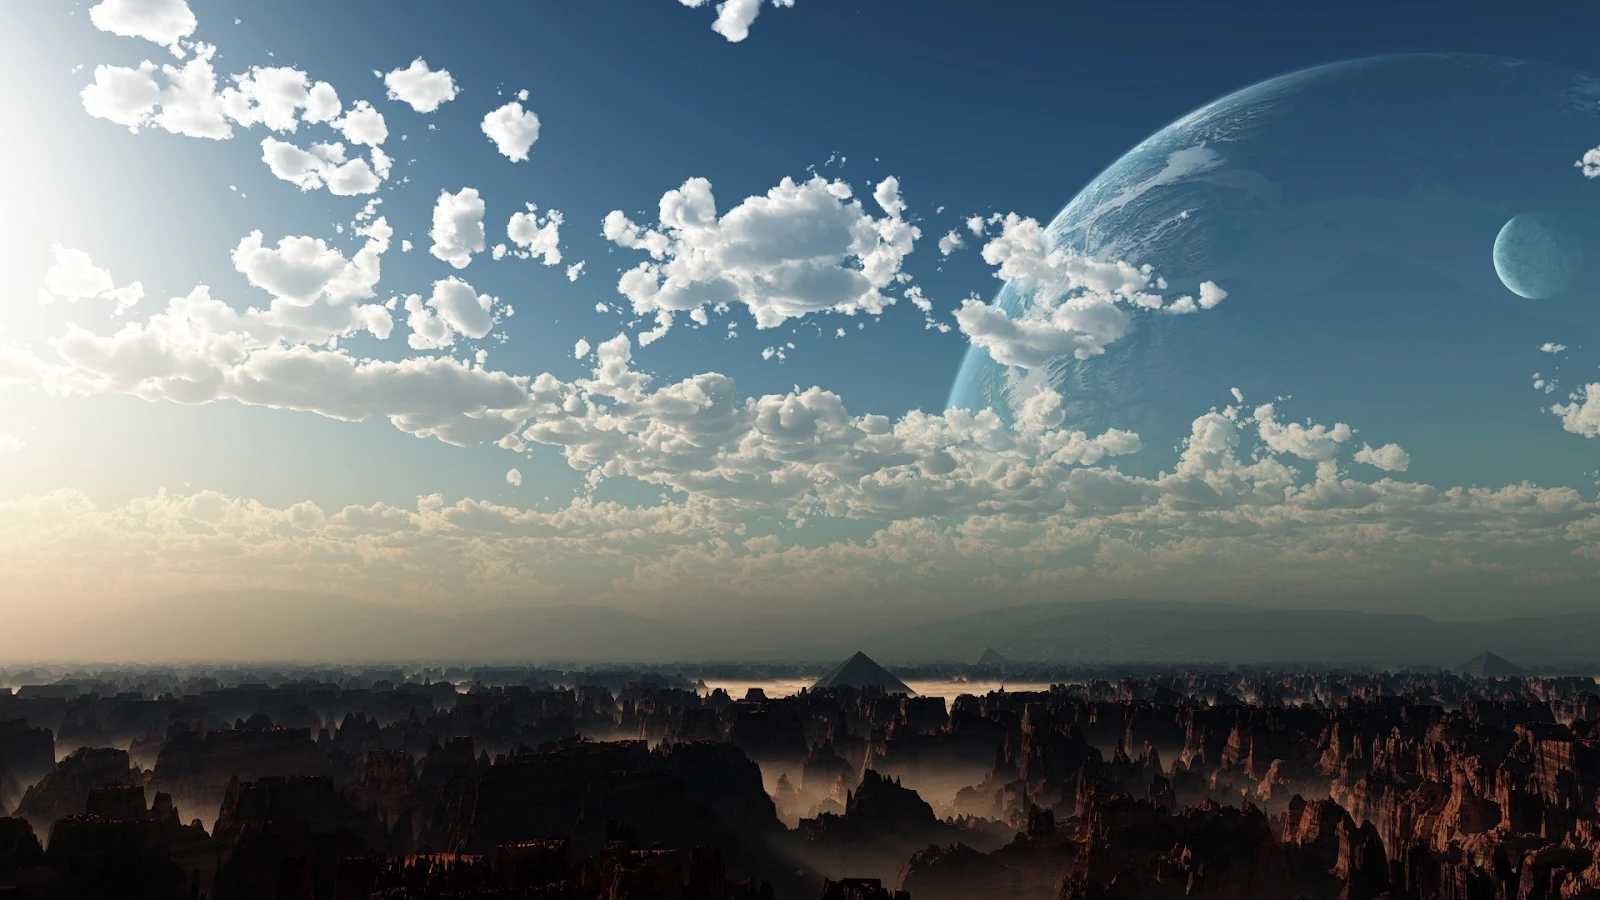 A Stunning Clouds, Digital Art, Planet, Moon, Landscape Full HD Desktop and Mobile Wallpaper Background (1920x1080)